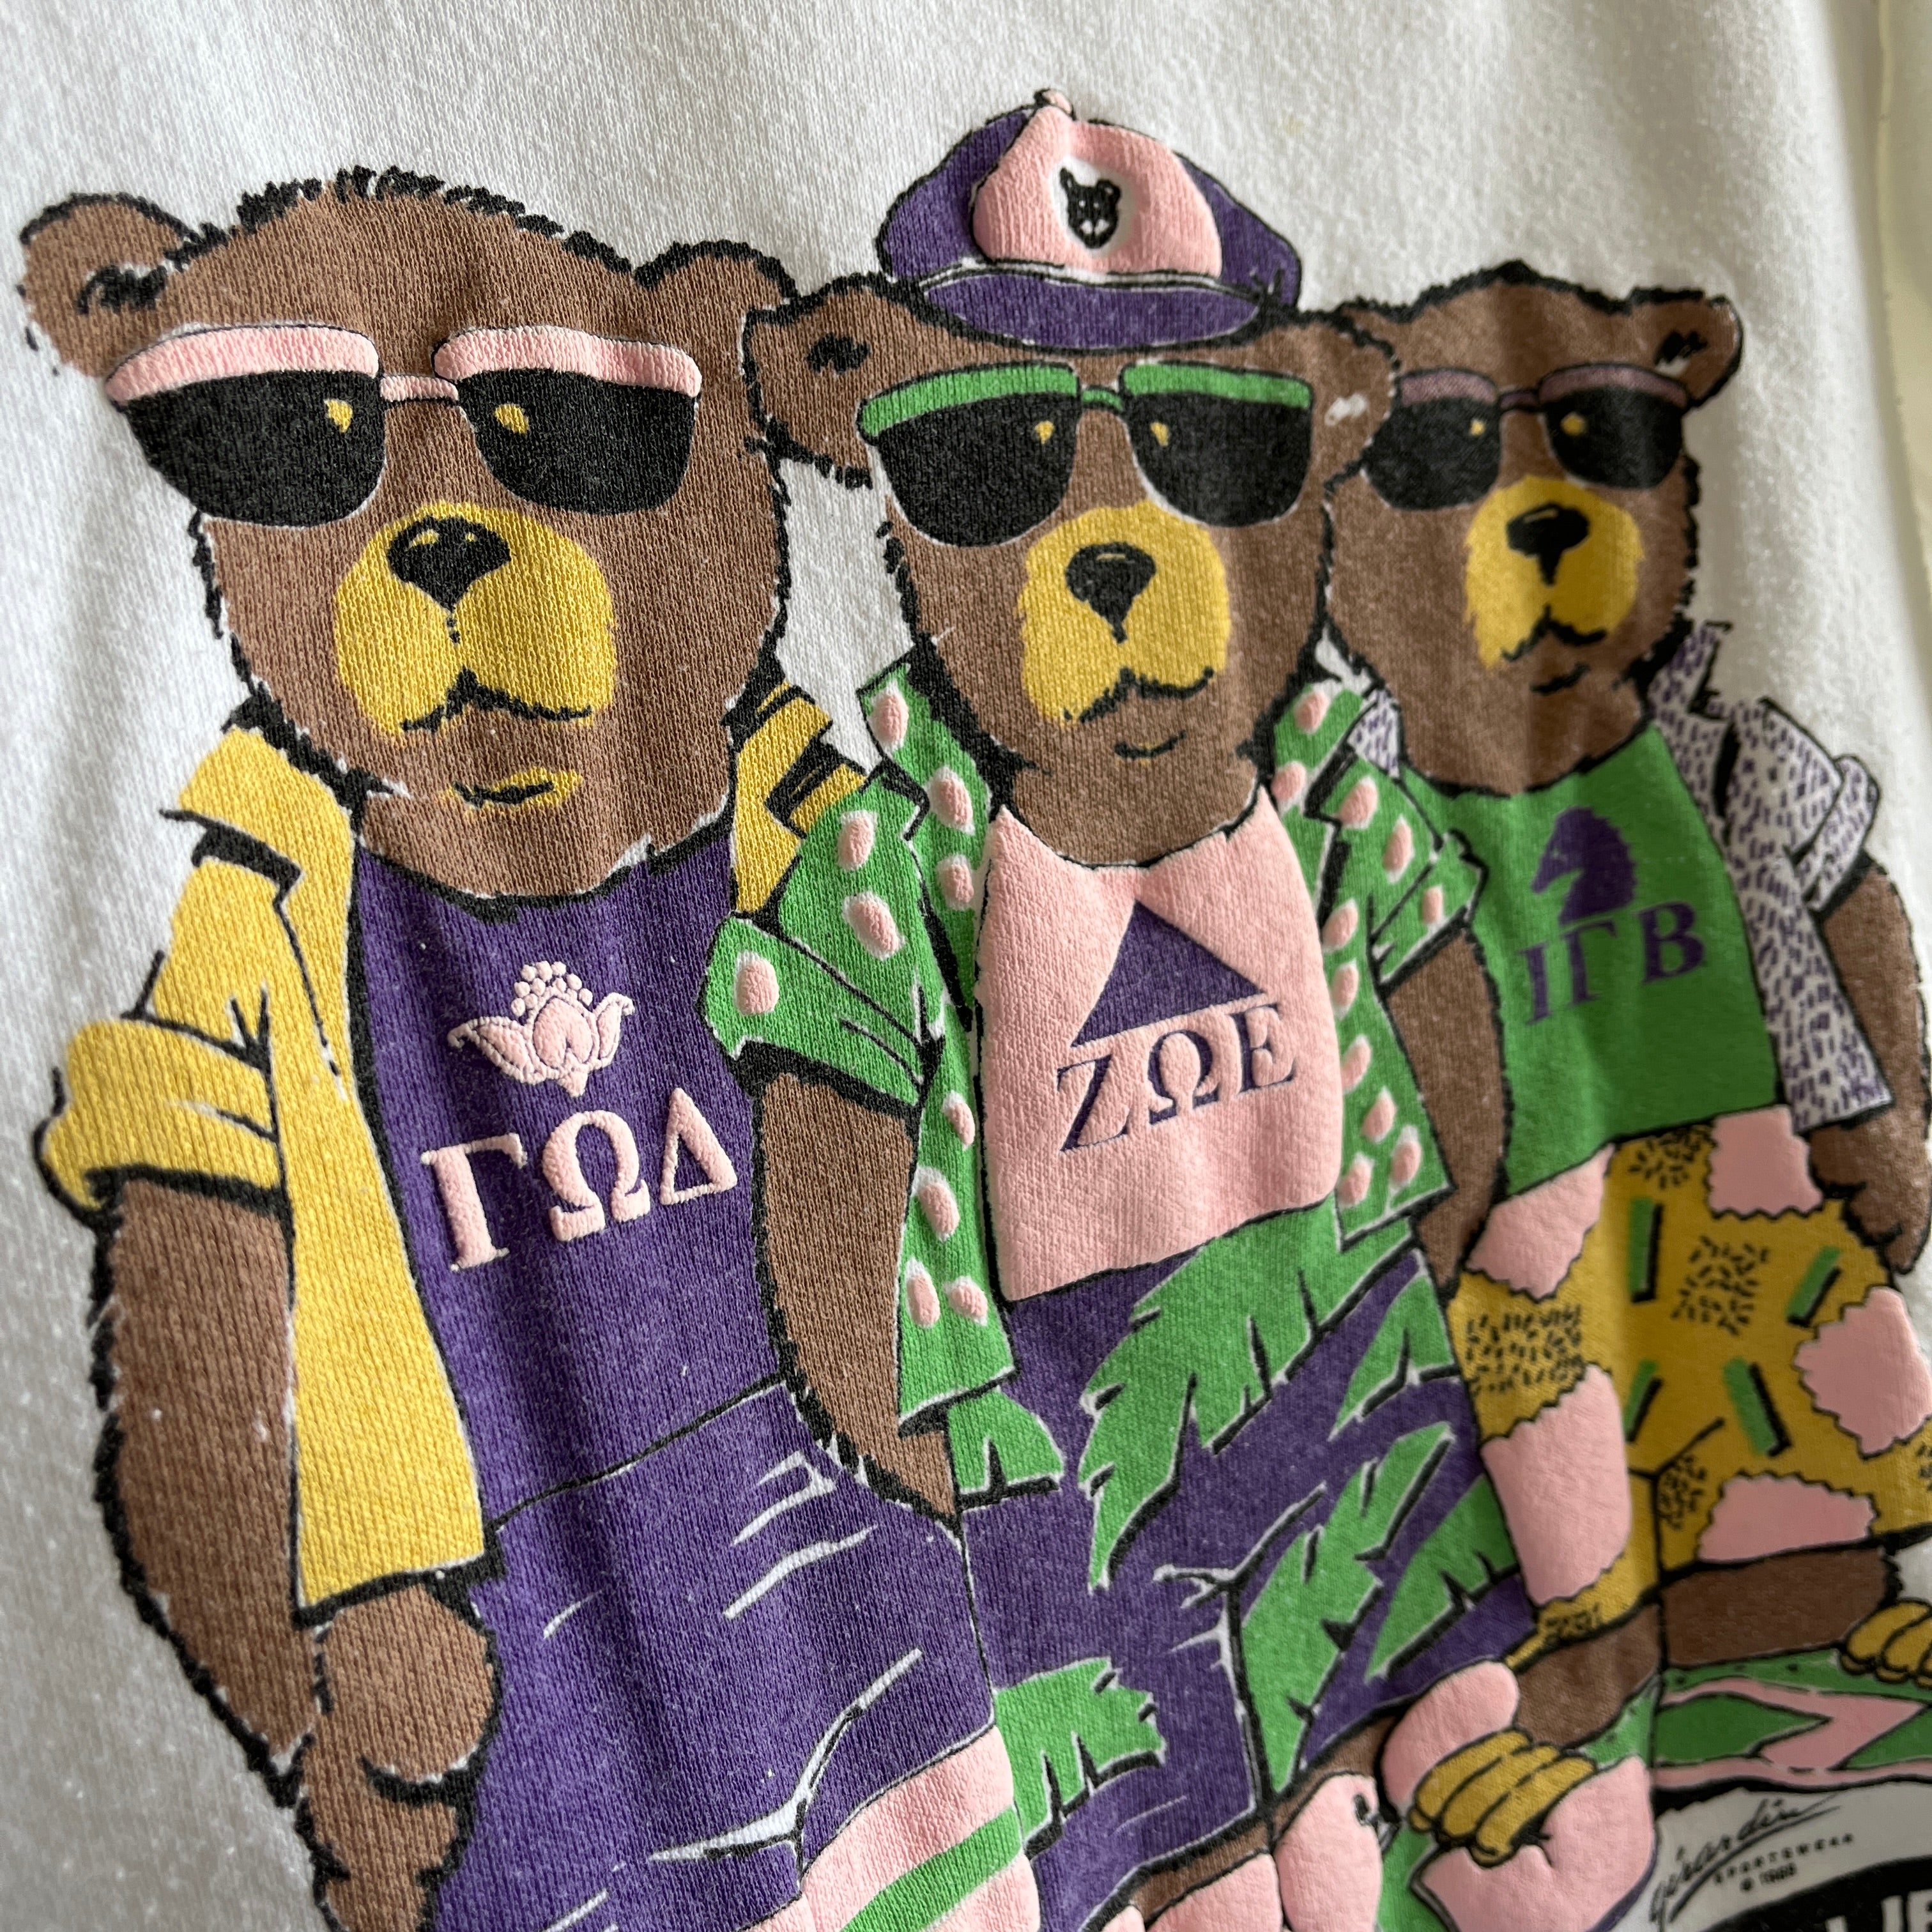 1988 The Frat Pack - Frat Bears - Naughty Bears Club - Sweatshirt by Jerzees